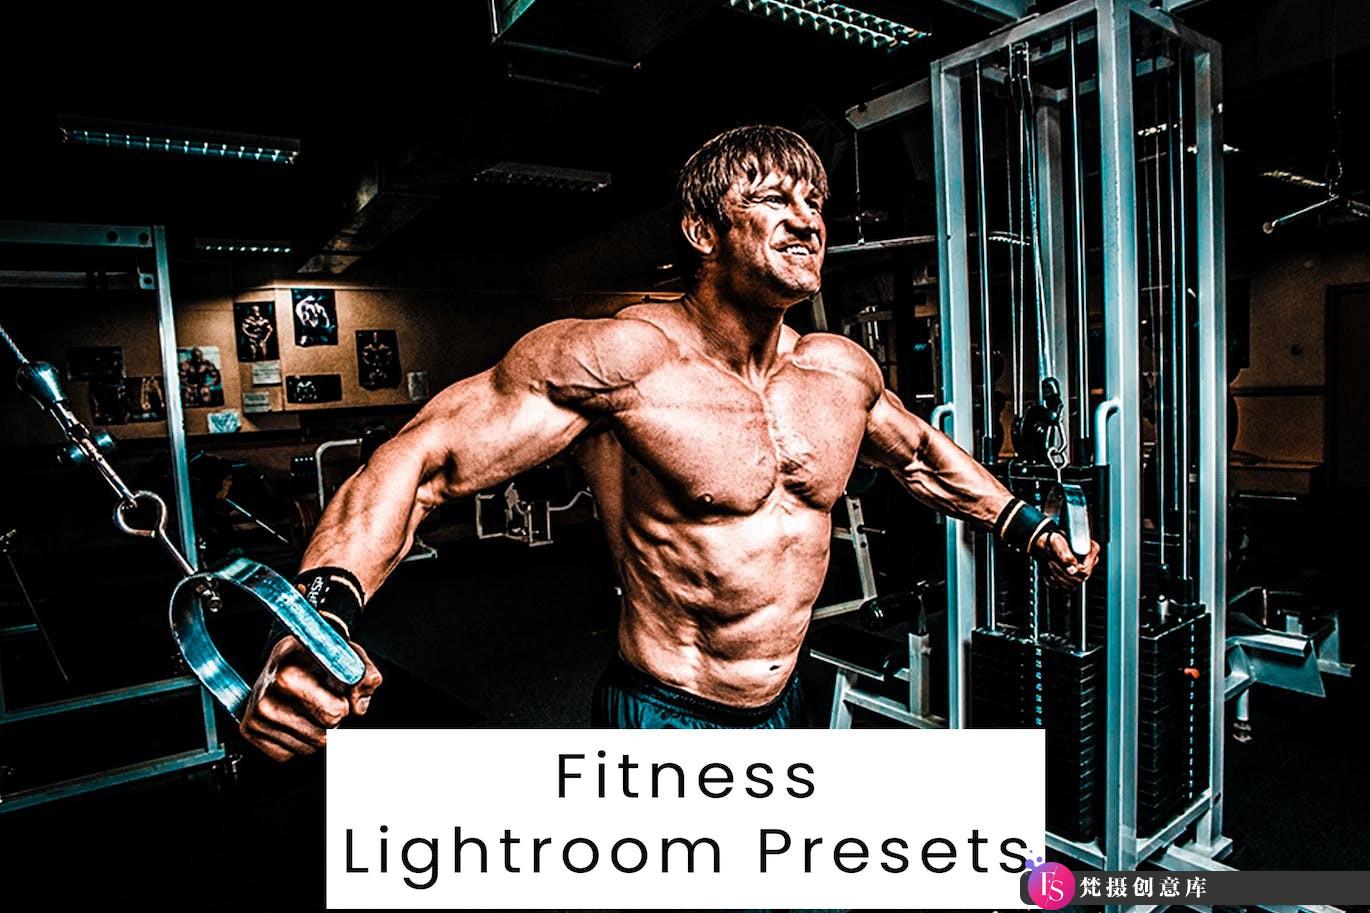 [免费LR预设]免费LR预设-健身人像HDR调色Lightroom预设Fitness Lightroom Presets-梵摄创意库